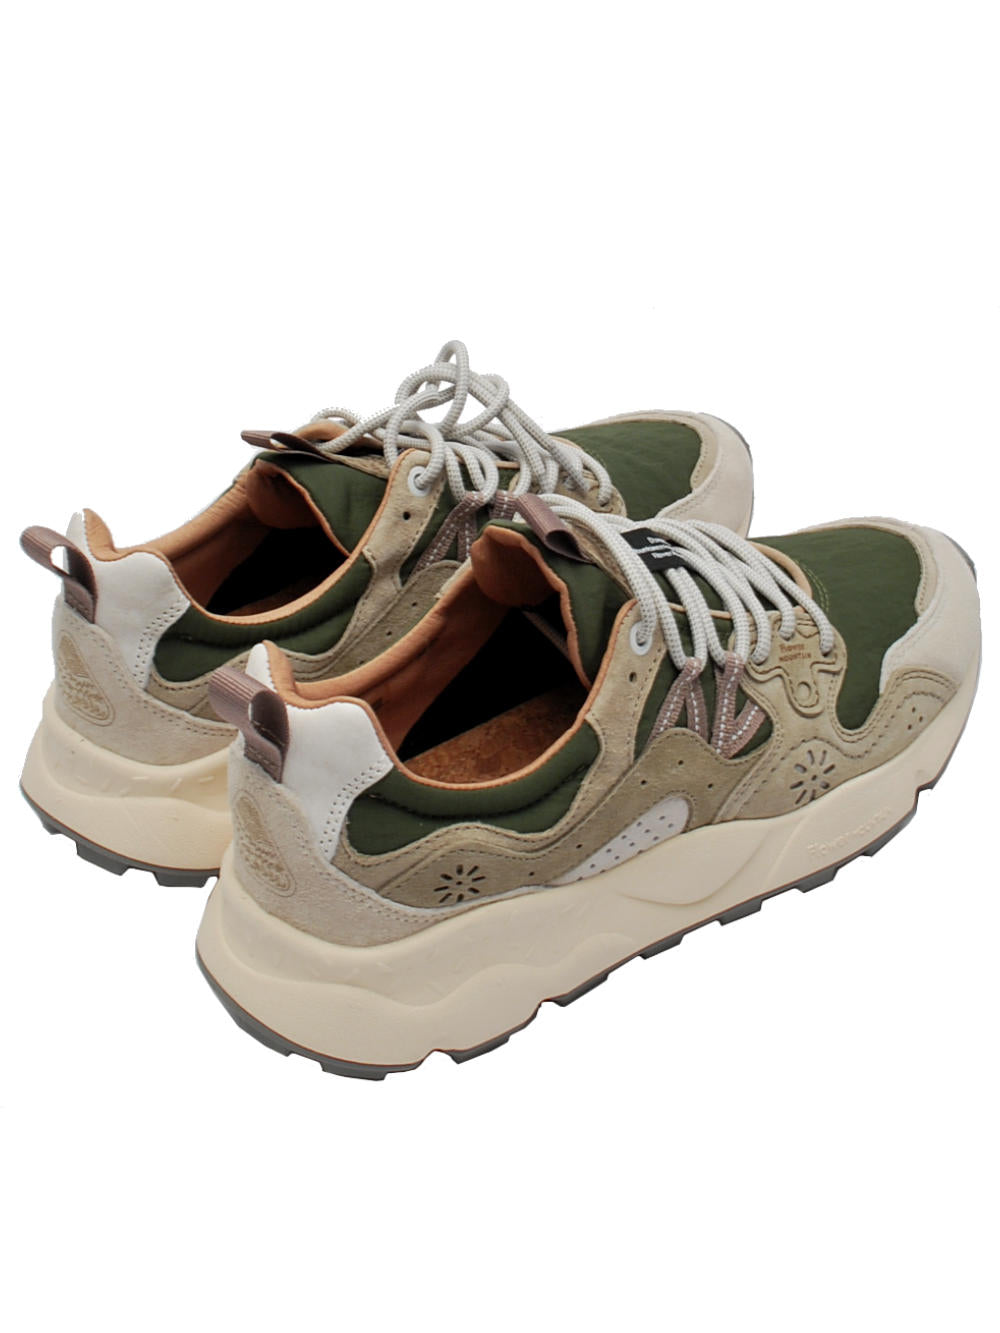 Flower mountain sneaker yamano 3 1n48 off white military green pe24